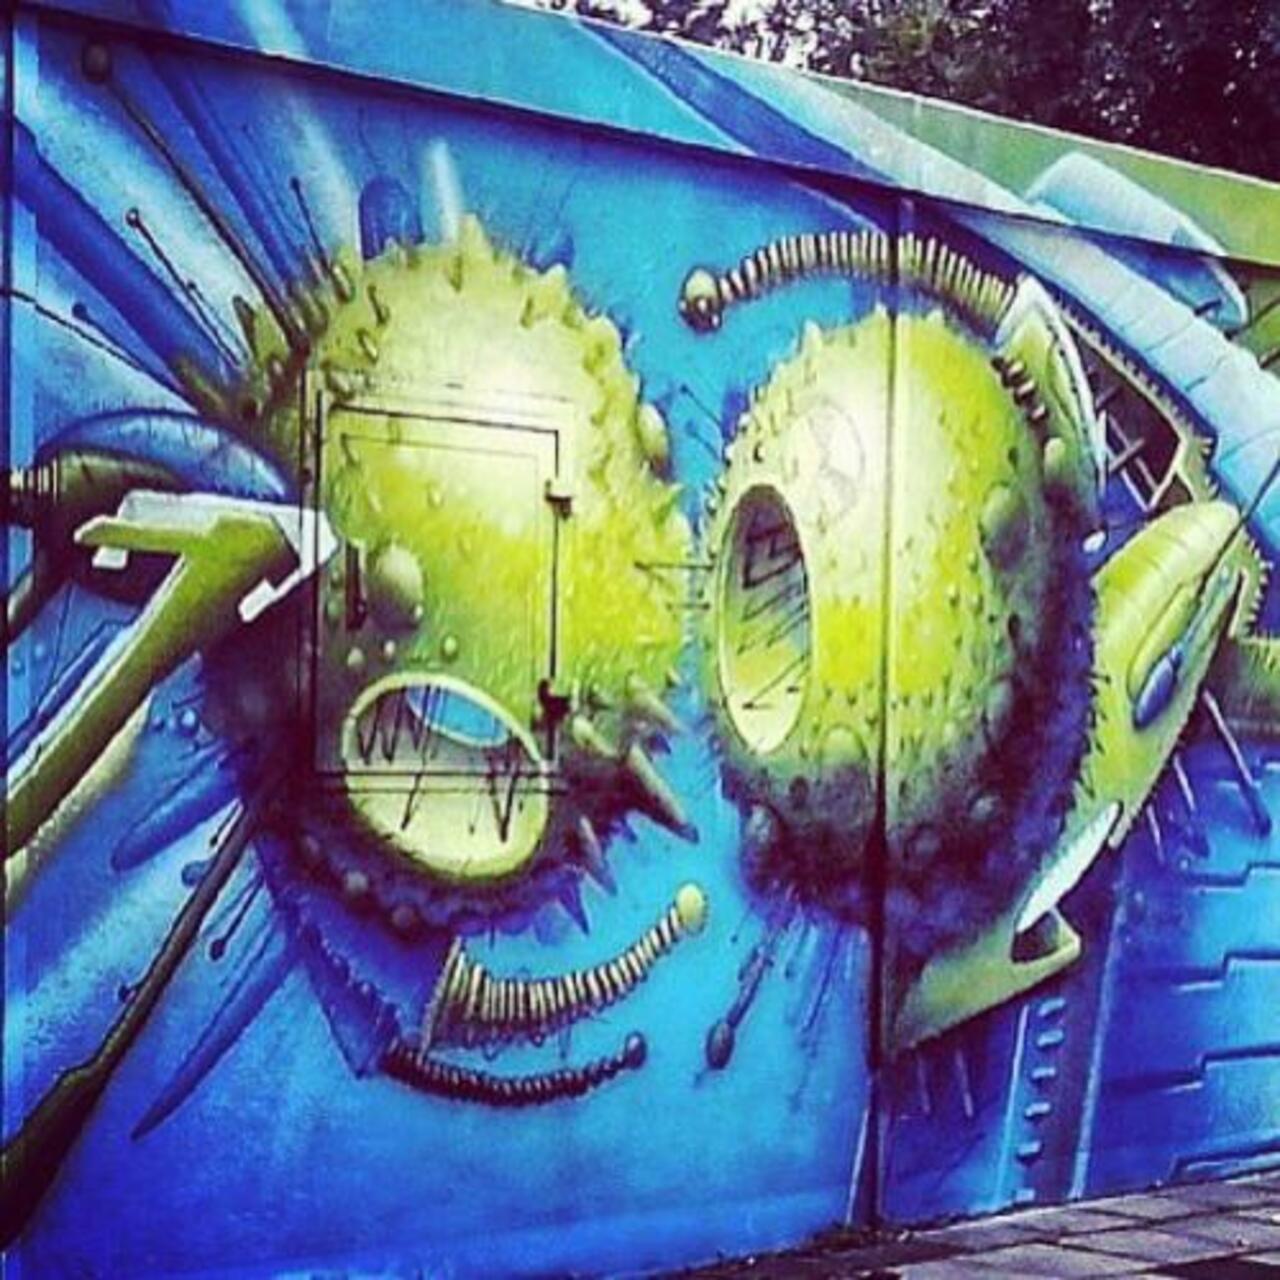 ##Streetart ##Sprayart ##Stencil ##Graffiti ... - #Mural - #ZangArt #Showcase - http://bit.ly/1aAQH2M http://t.co/mYAkgJgm7H